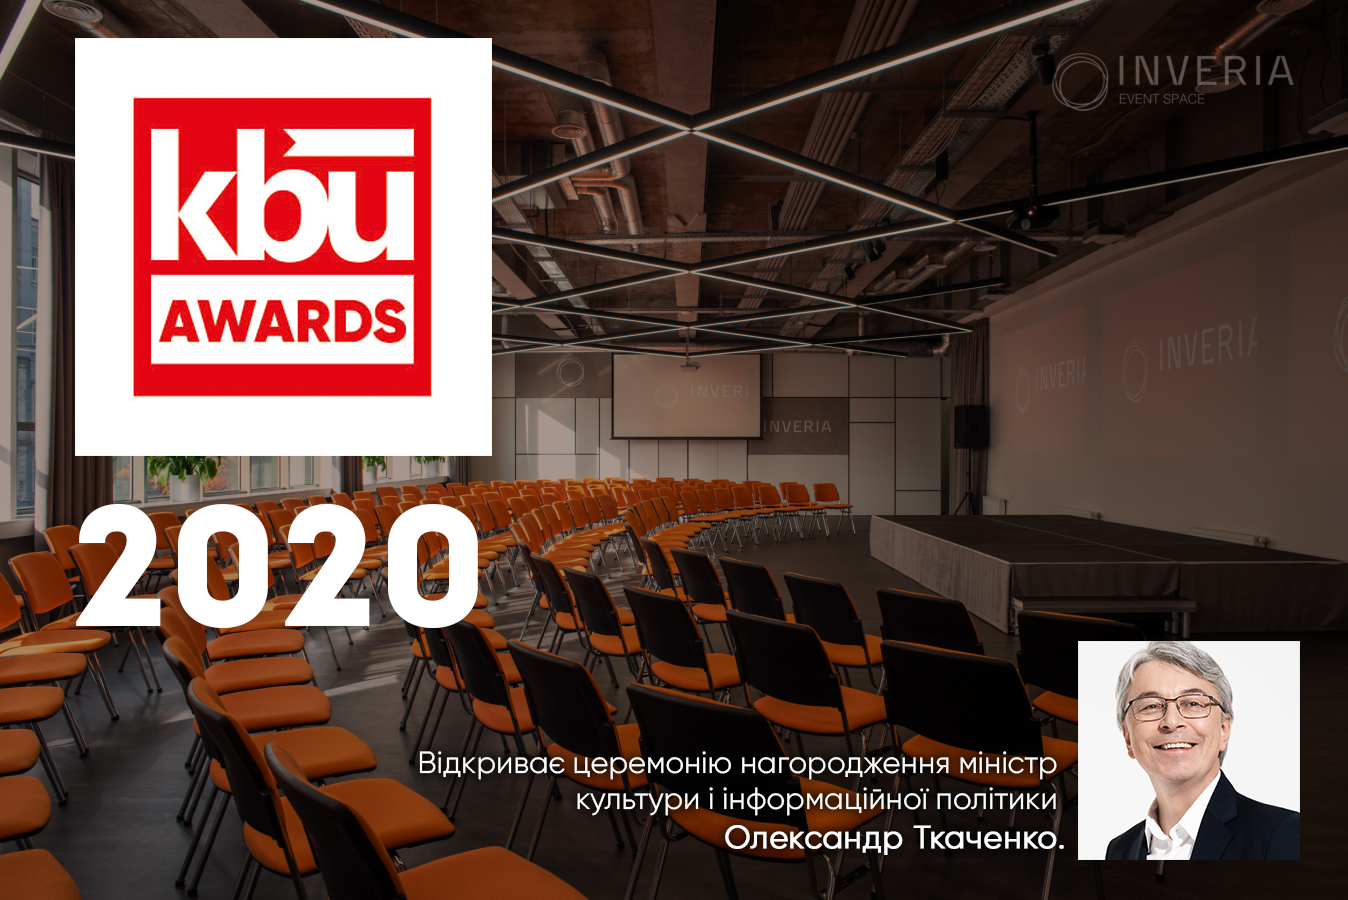 KBU AWARDS 2020 Book Award Ceremony